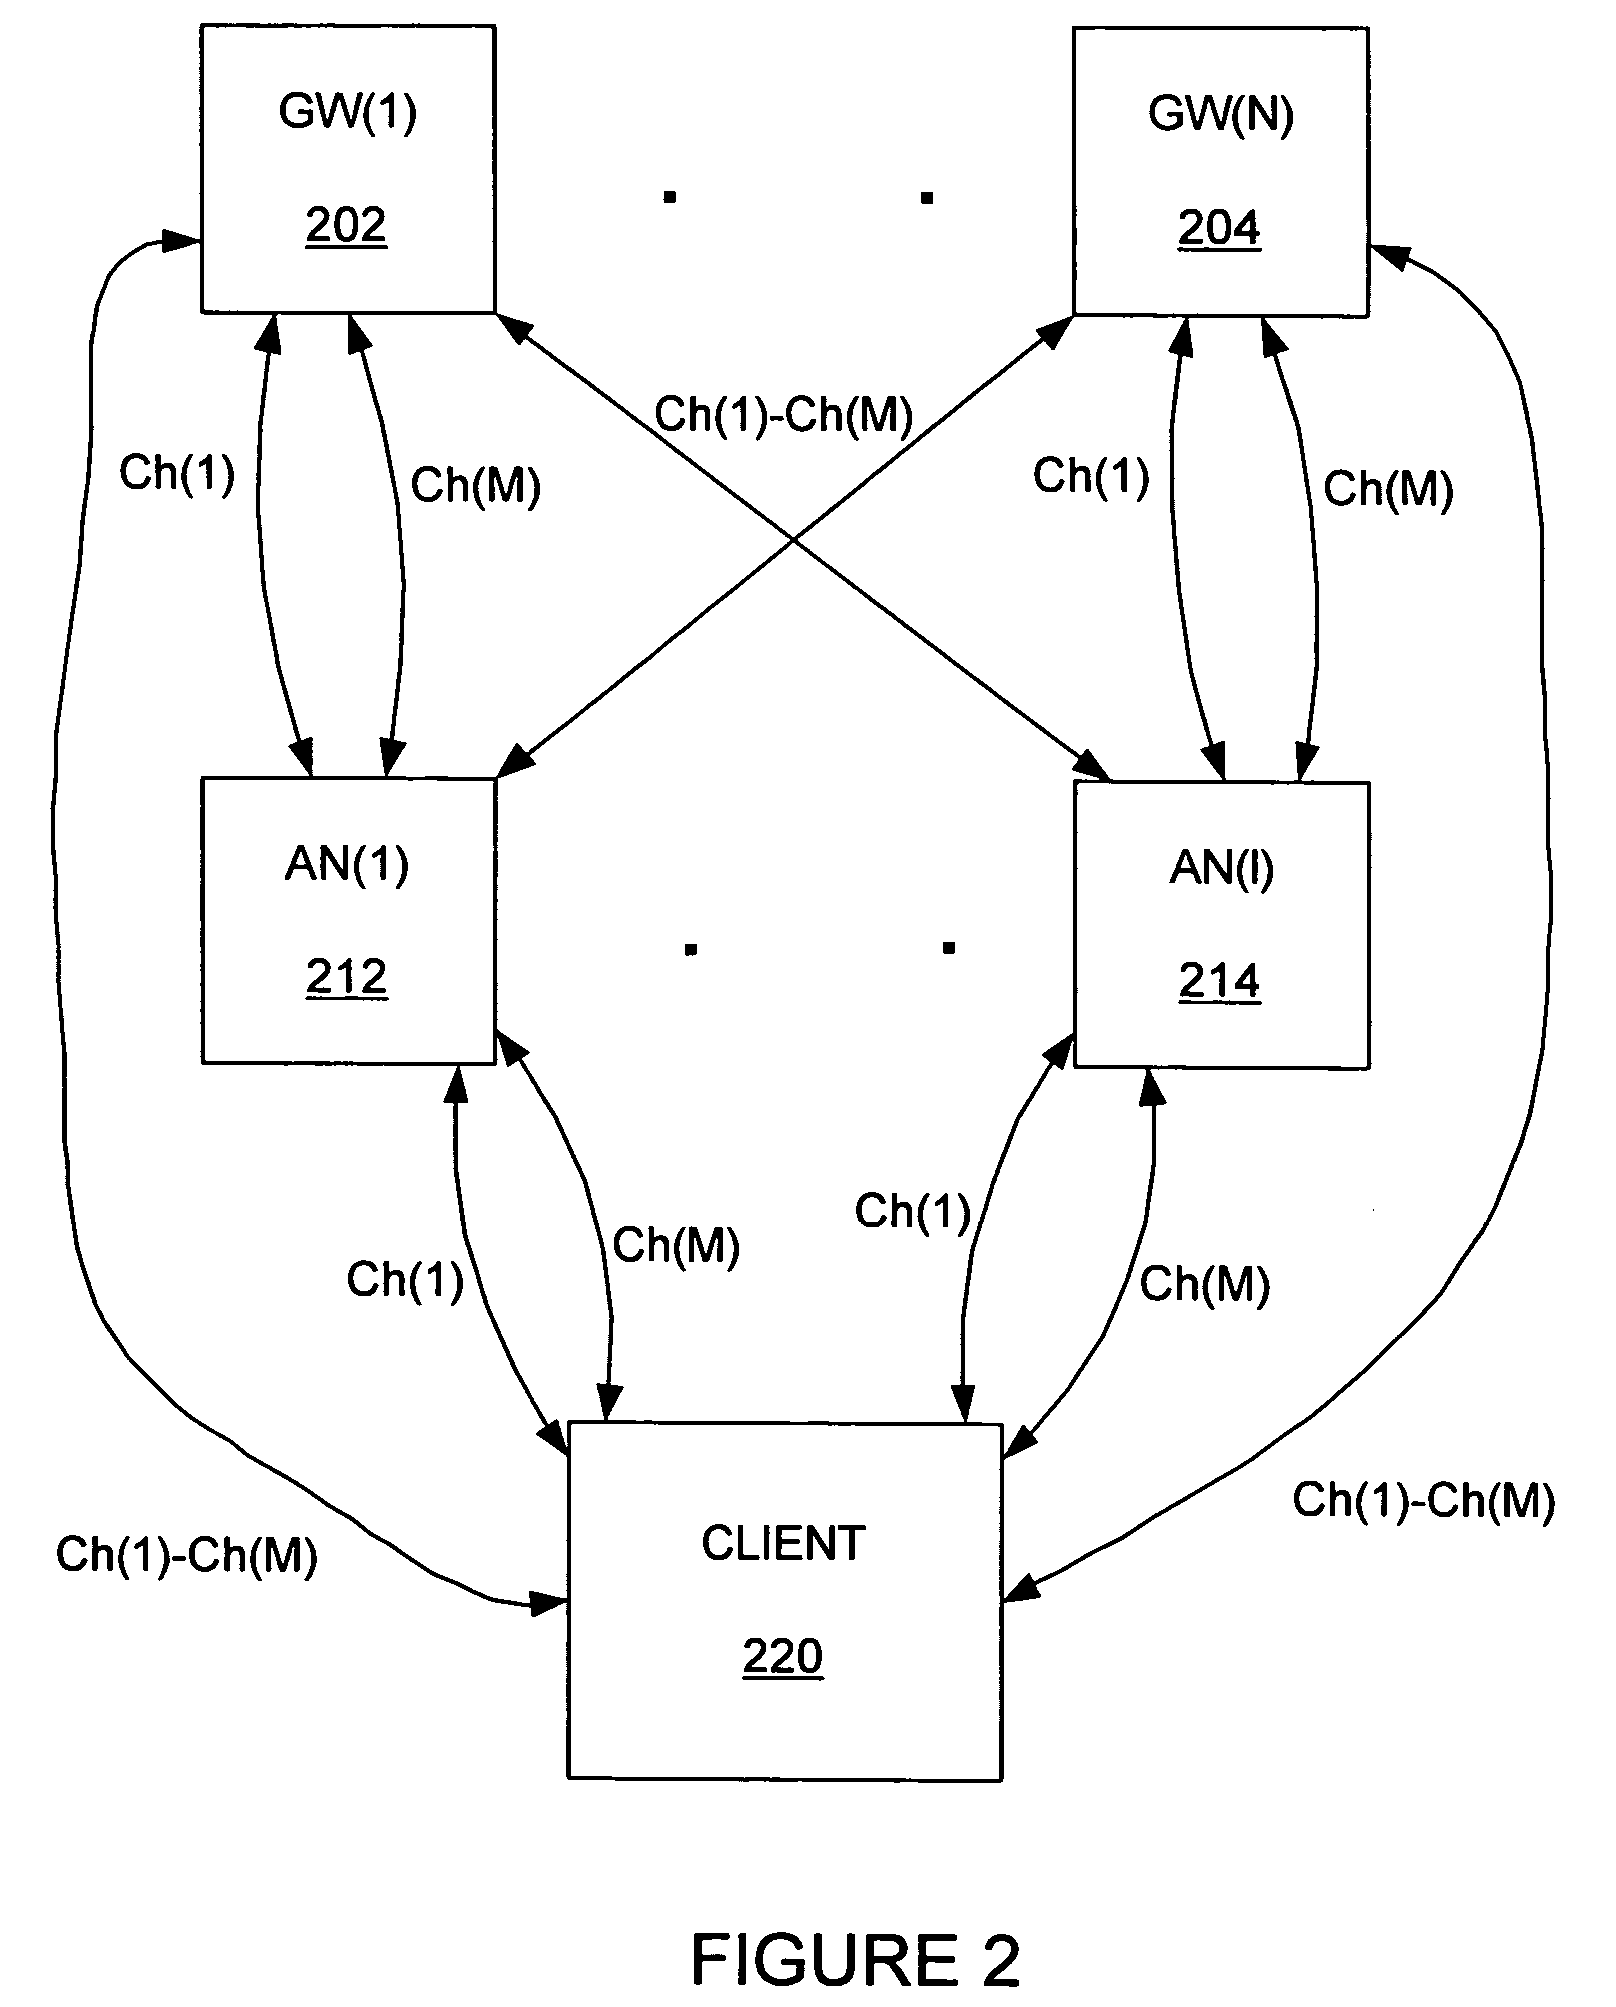 Multi-channel mesh network